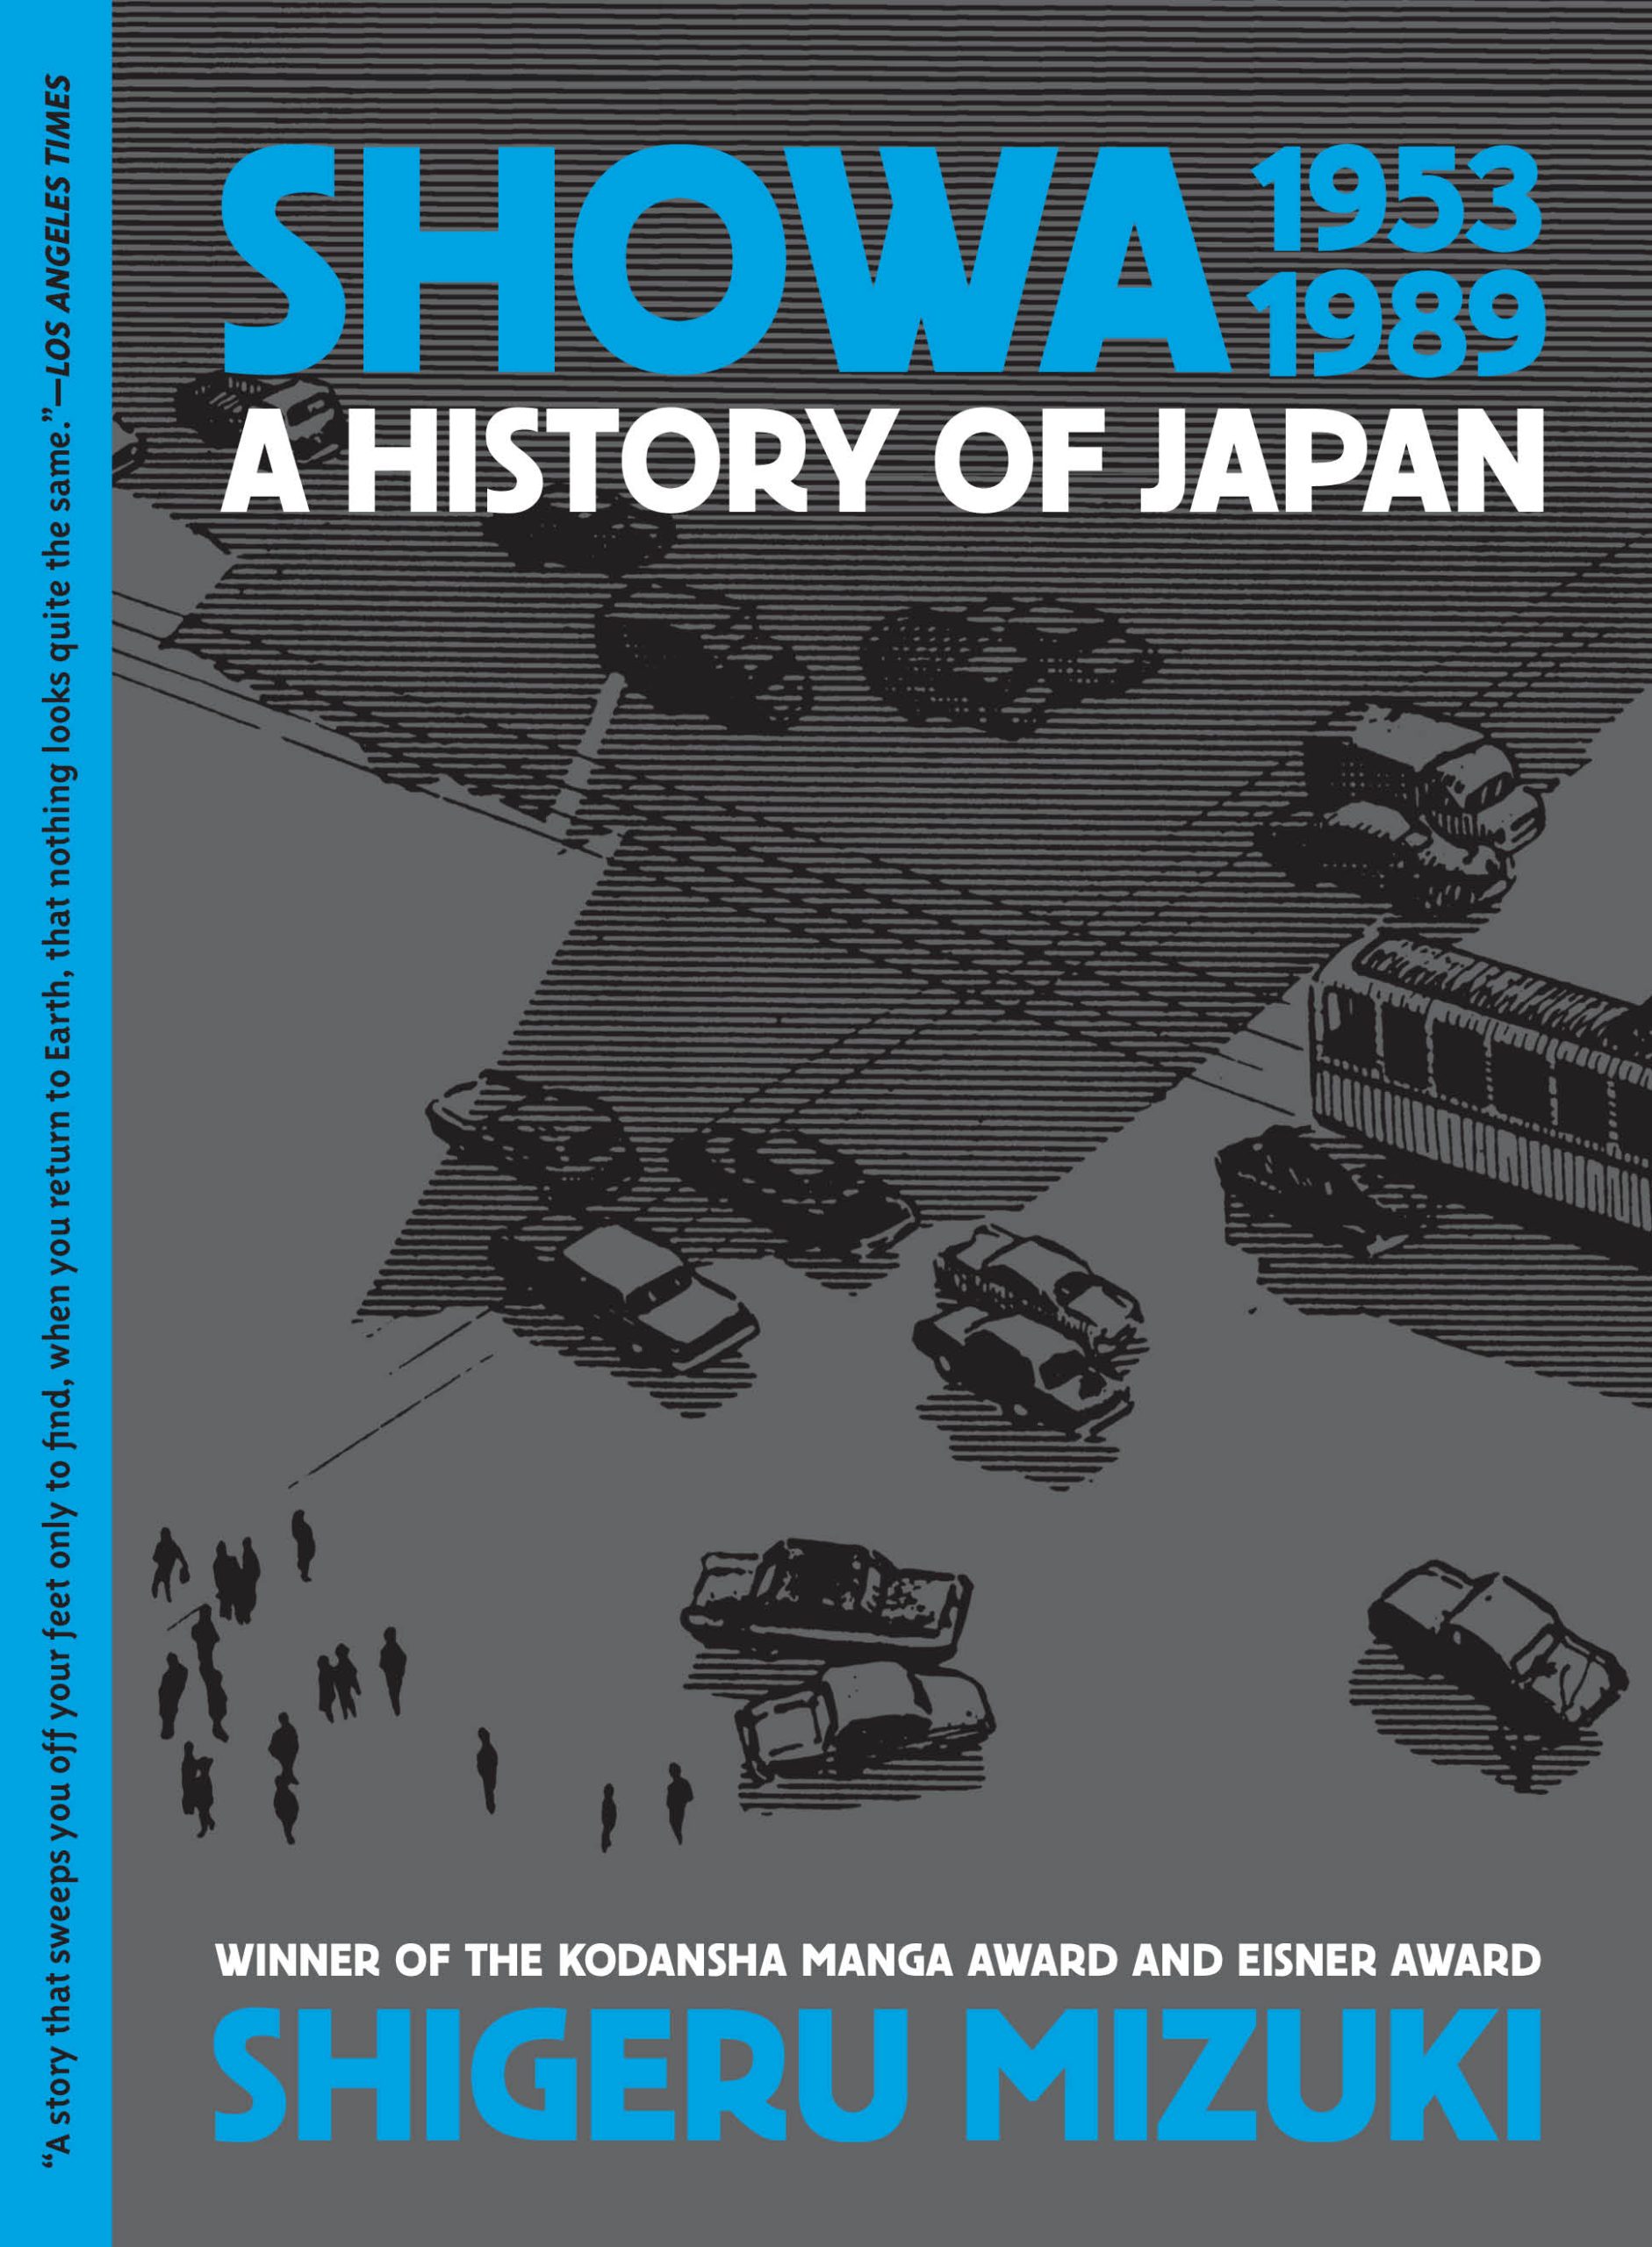 Showa 1953-1989: A History of Japan – Drawn & Quarterly